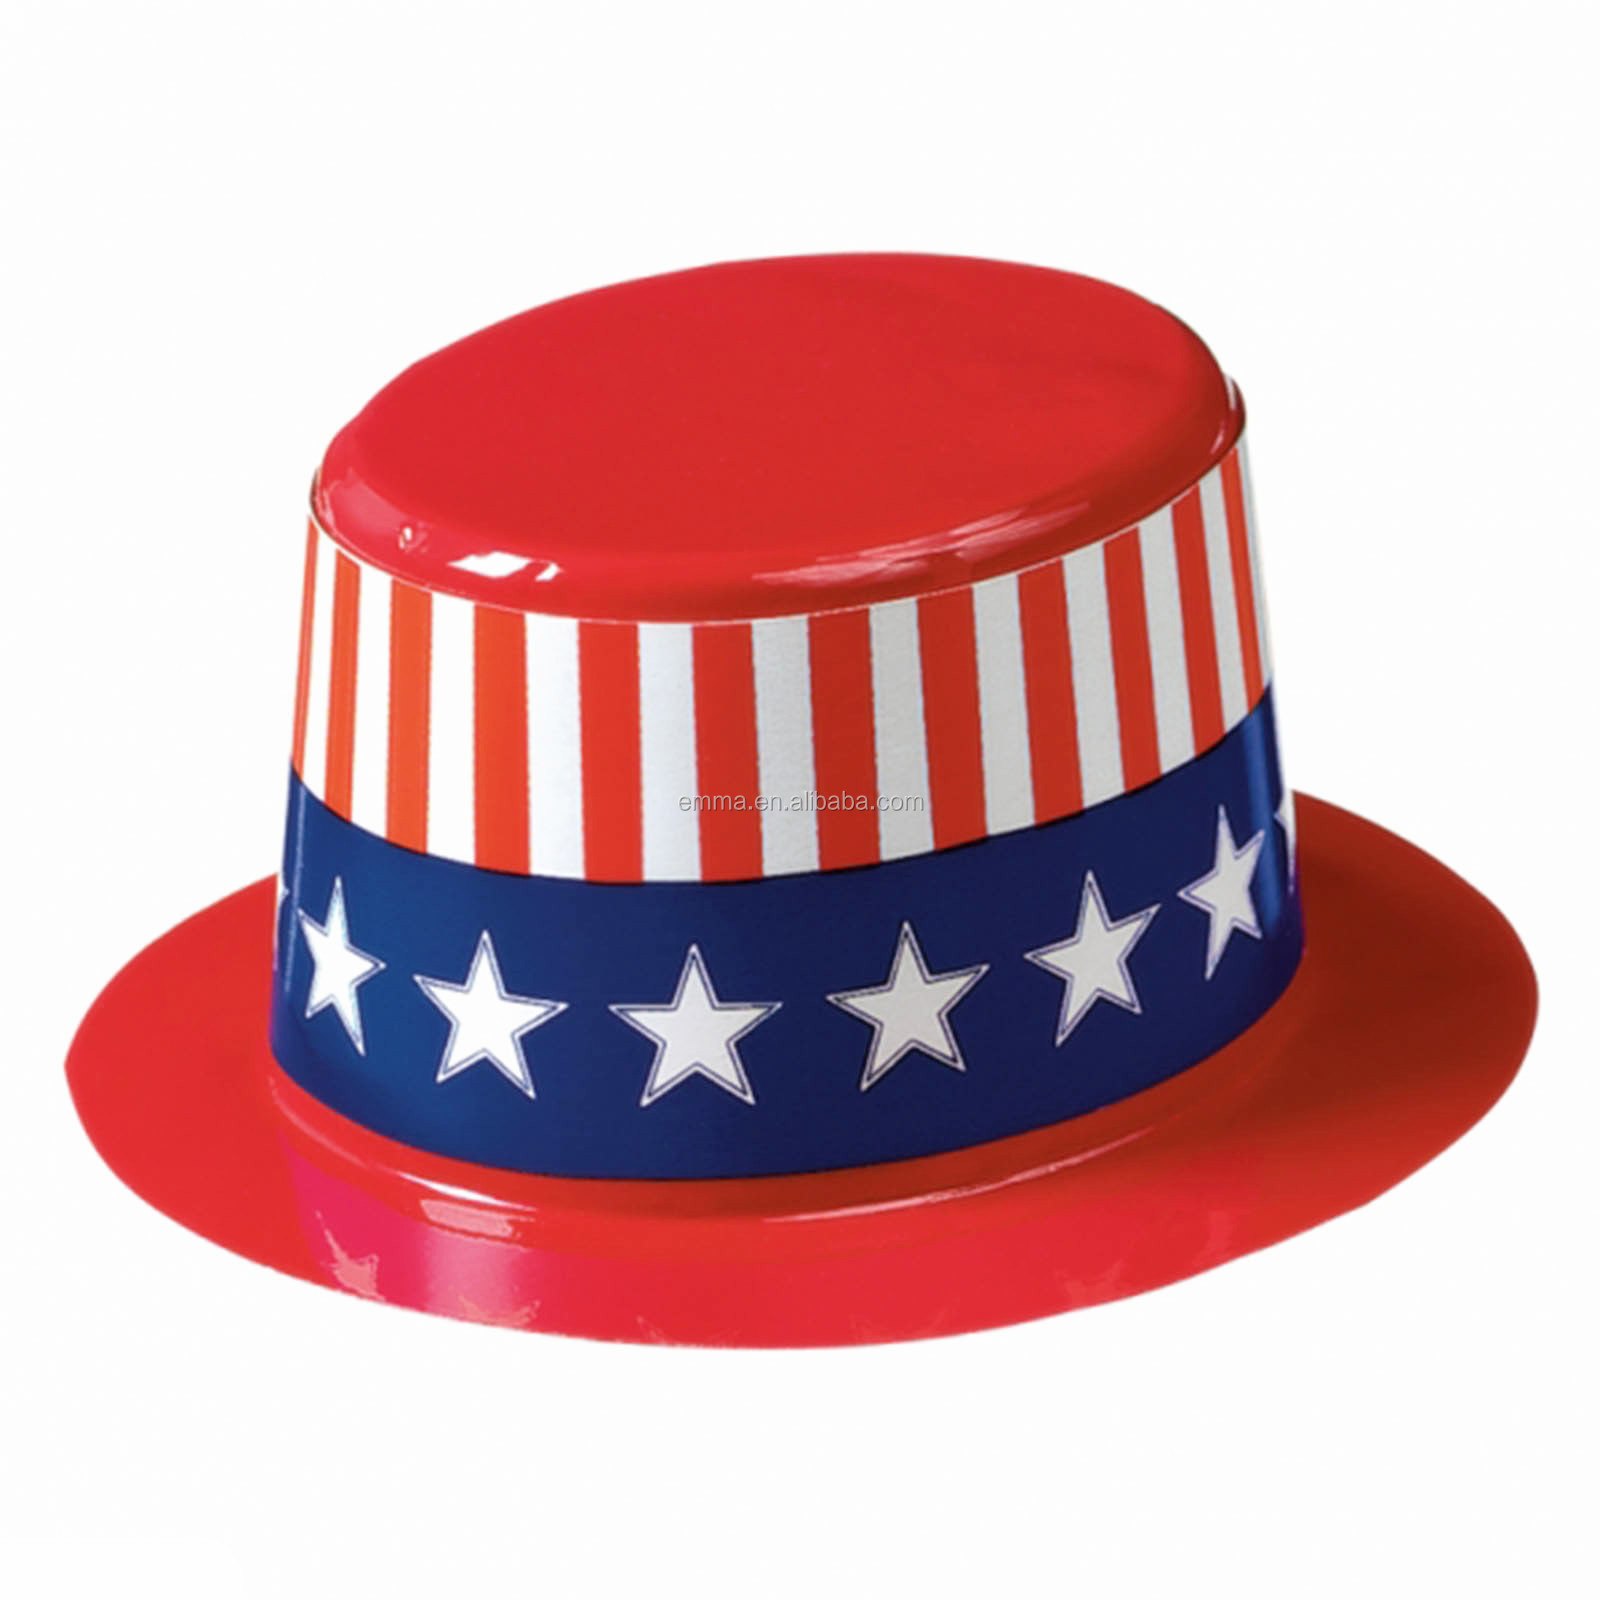 Шляпы Америка 1600. American Top hat. Партия шляп